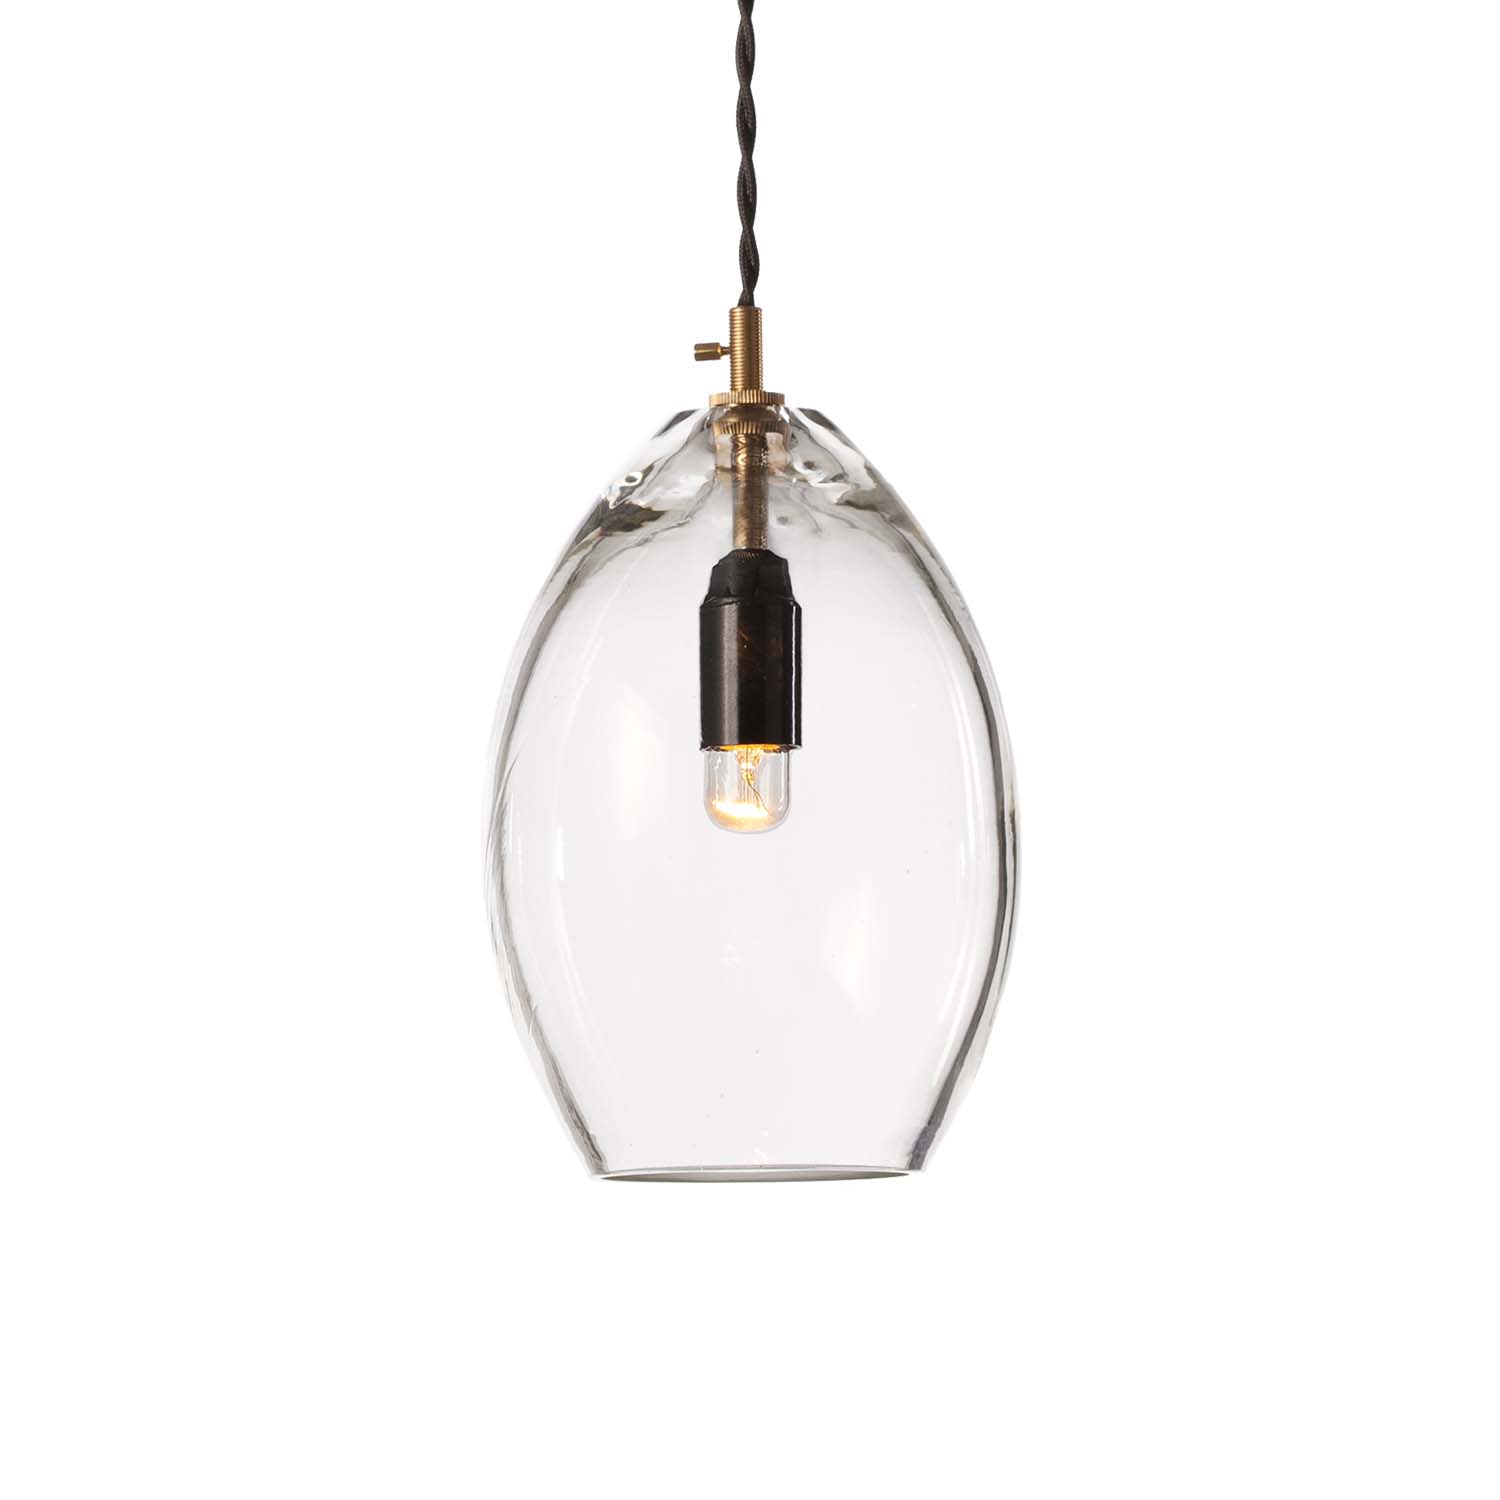 UNIKA - Vintage glass pendant light, designer creation